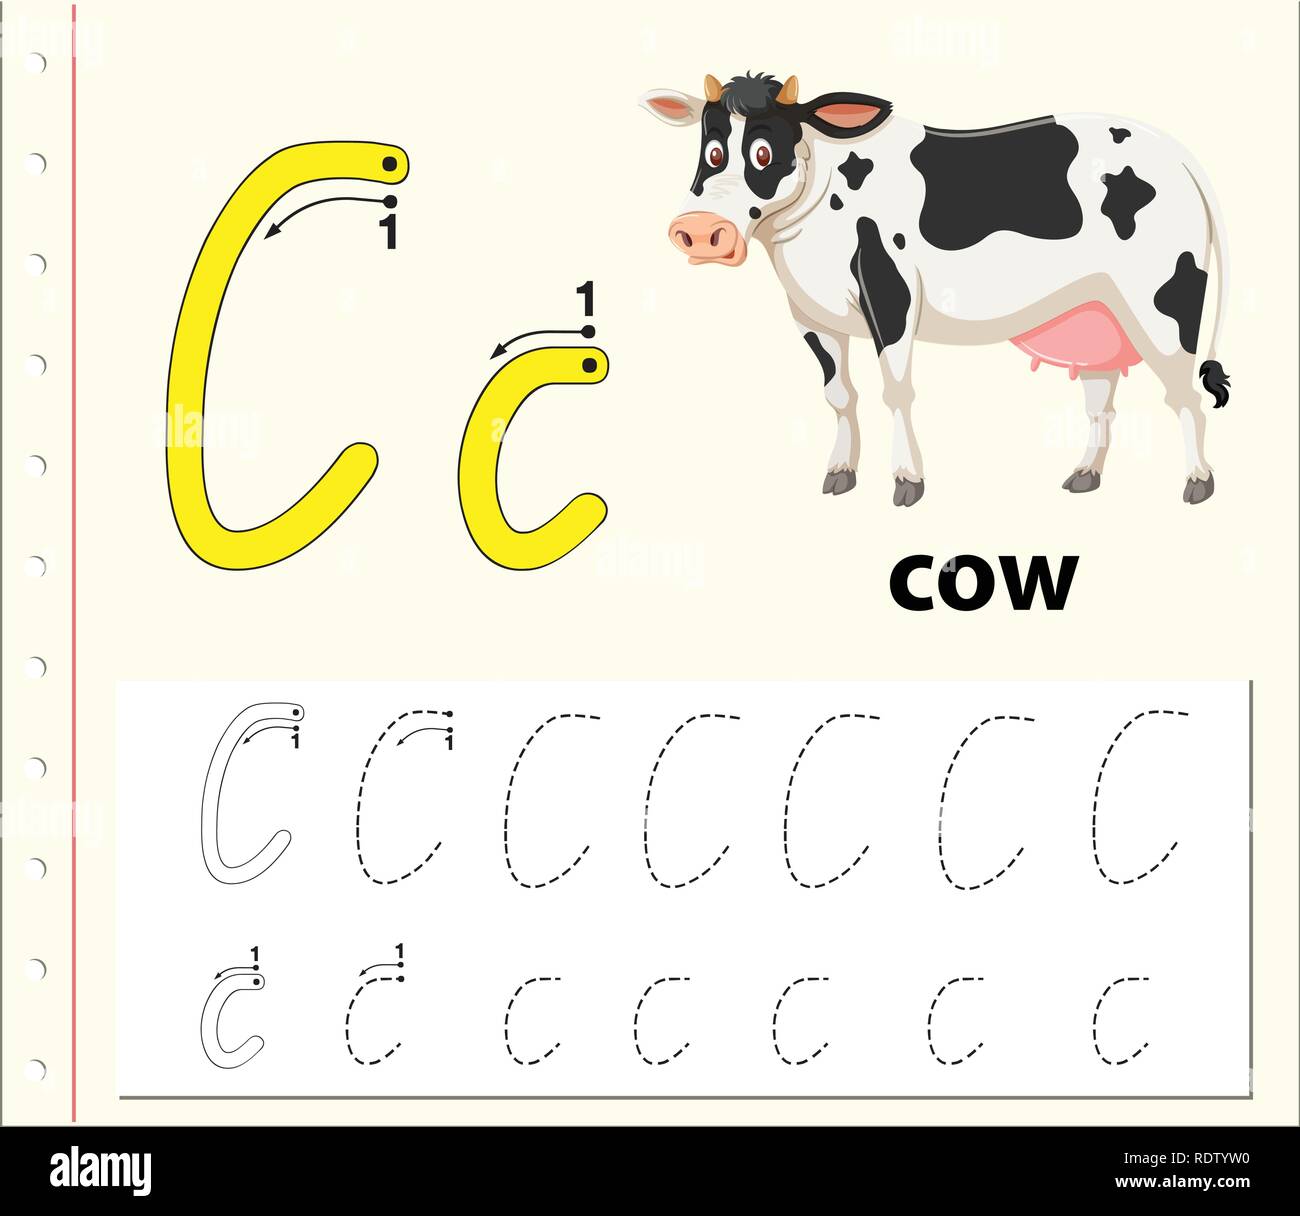 Letter C tracing alphabet worksheets illustration Stock Vector Image ...